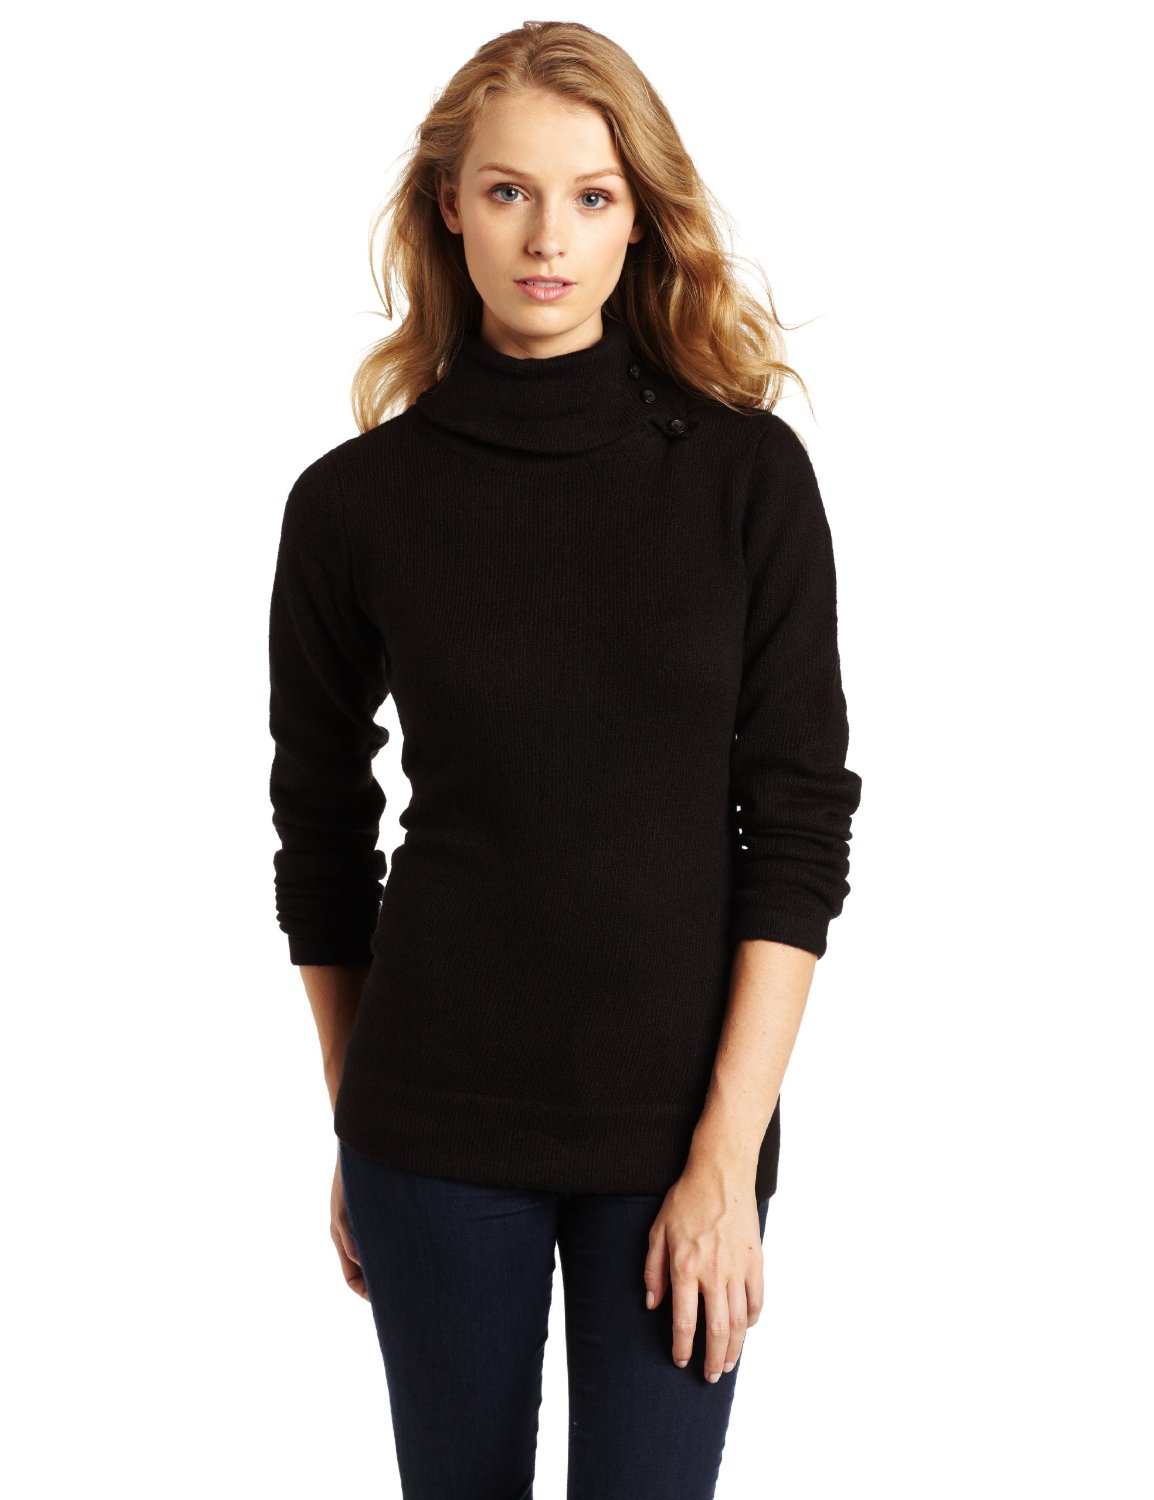 Sofia Cashmere Women's Long Sleeve 100% Cashmere Turtleneck Sweater. 